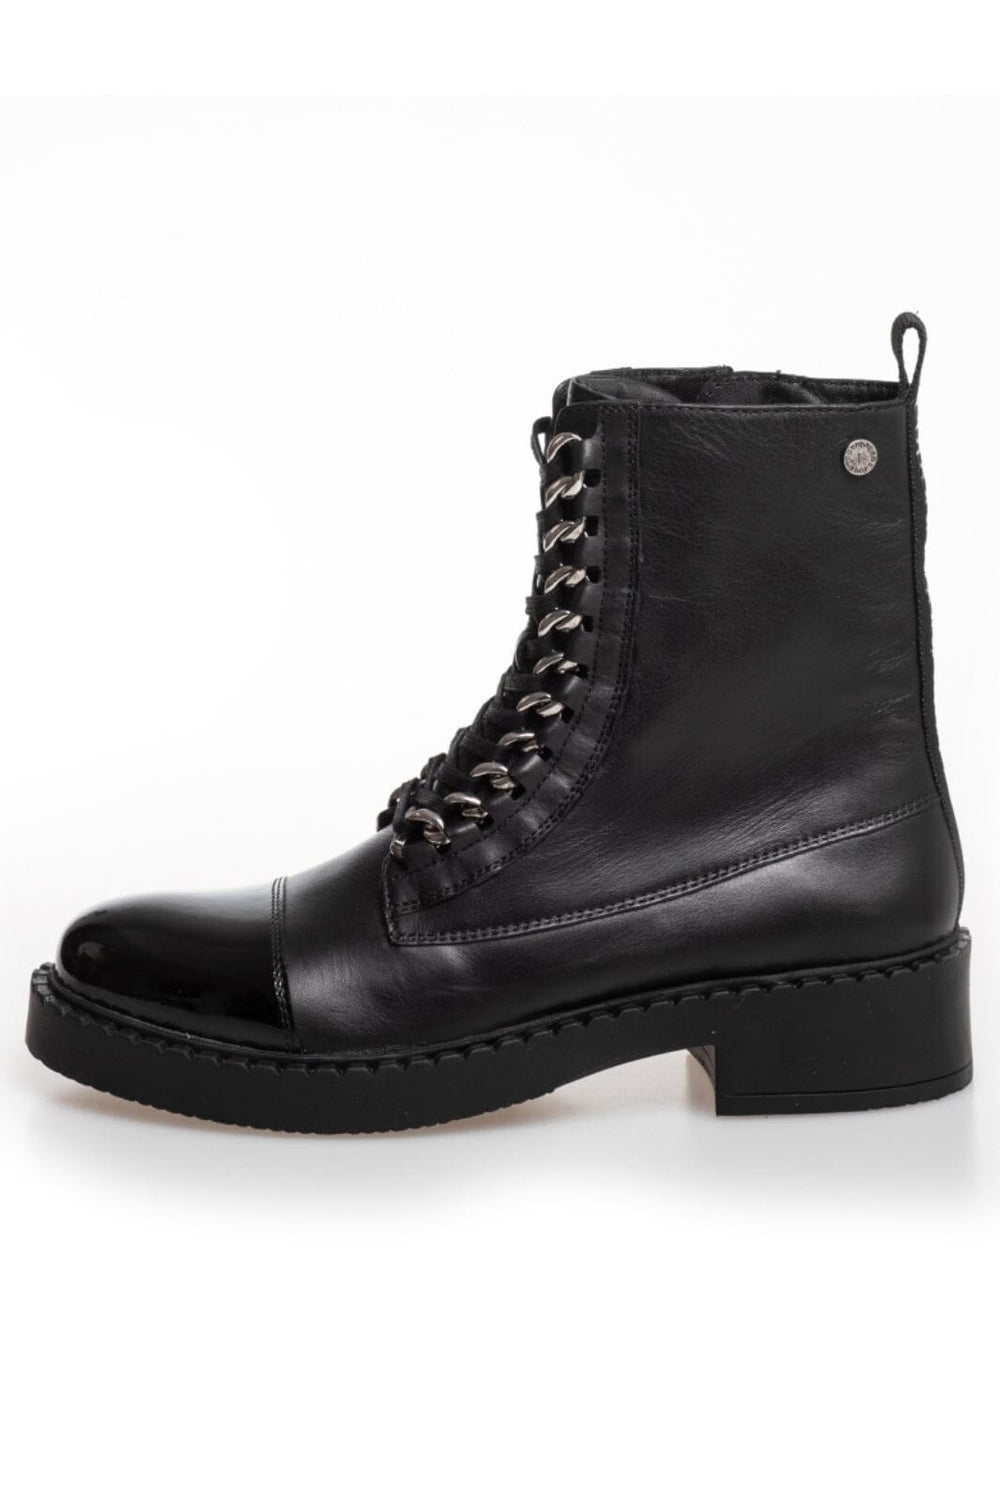 Forudbestilling - Copenhagen Shoes - New Rock Patent - 2206 Black/Silver Støvler 